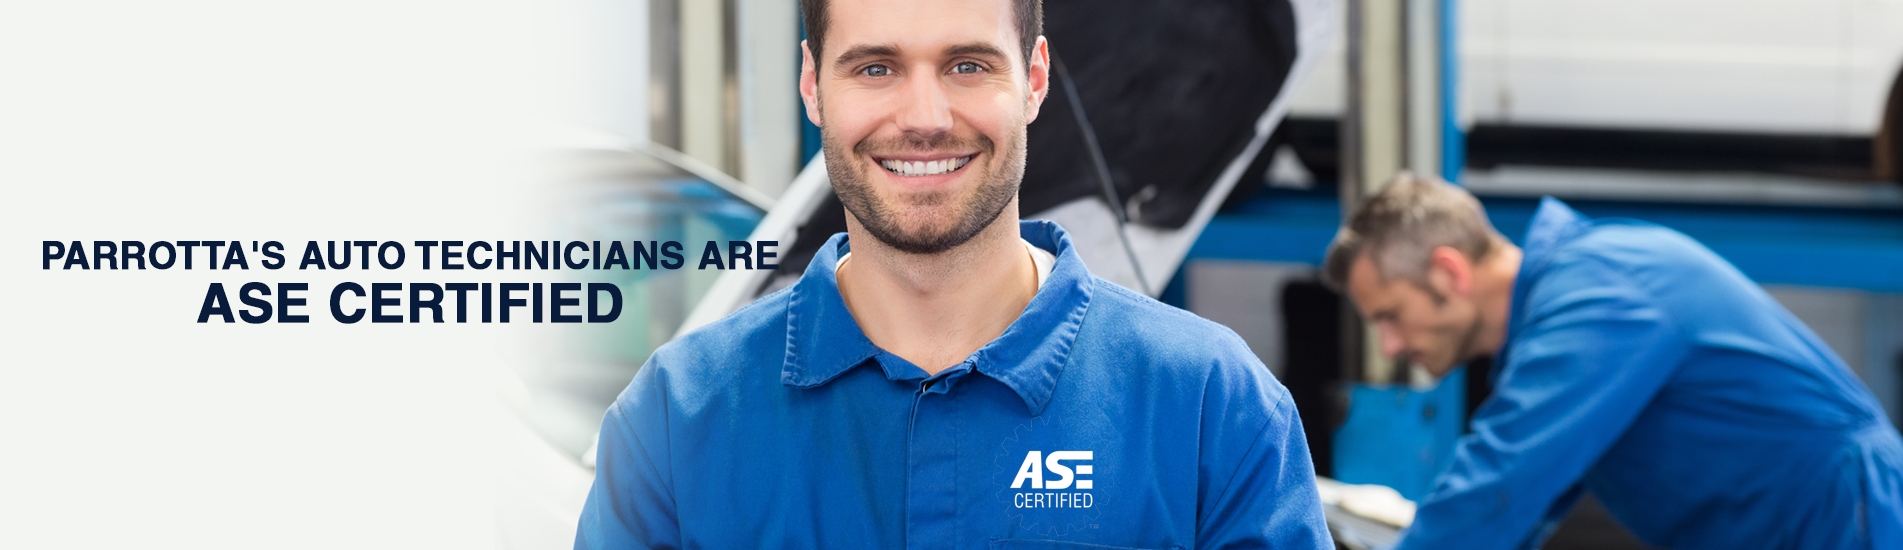 Parrotta's auto technicians are ASE certified